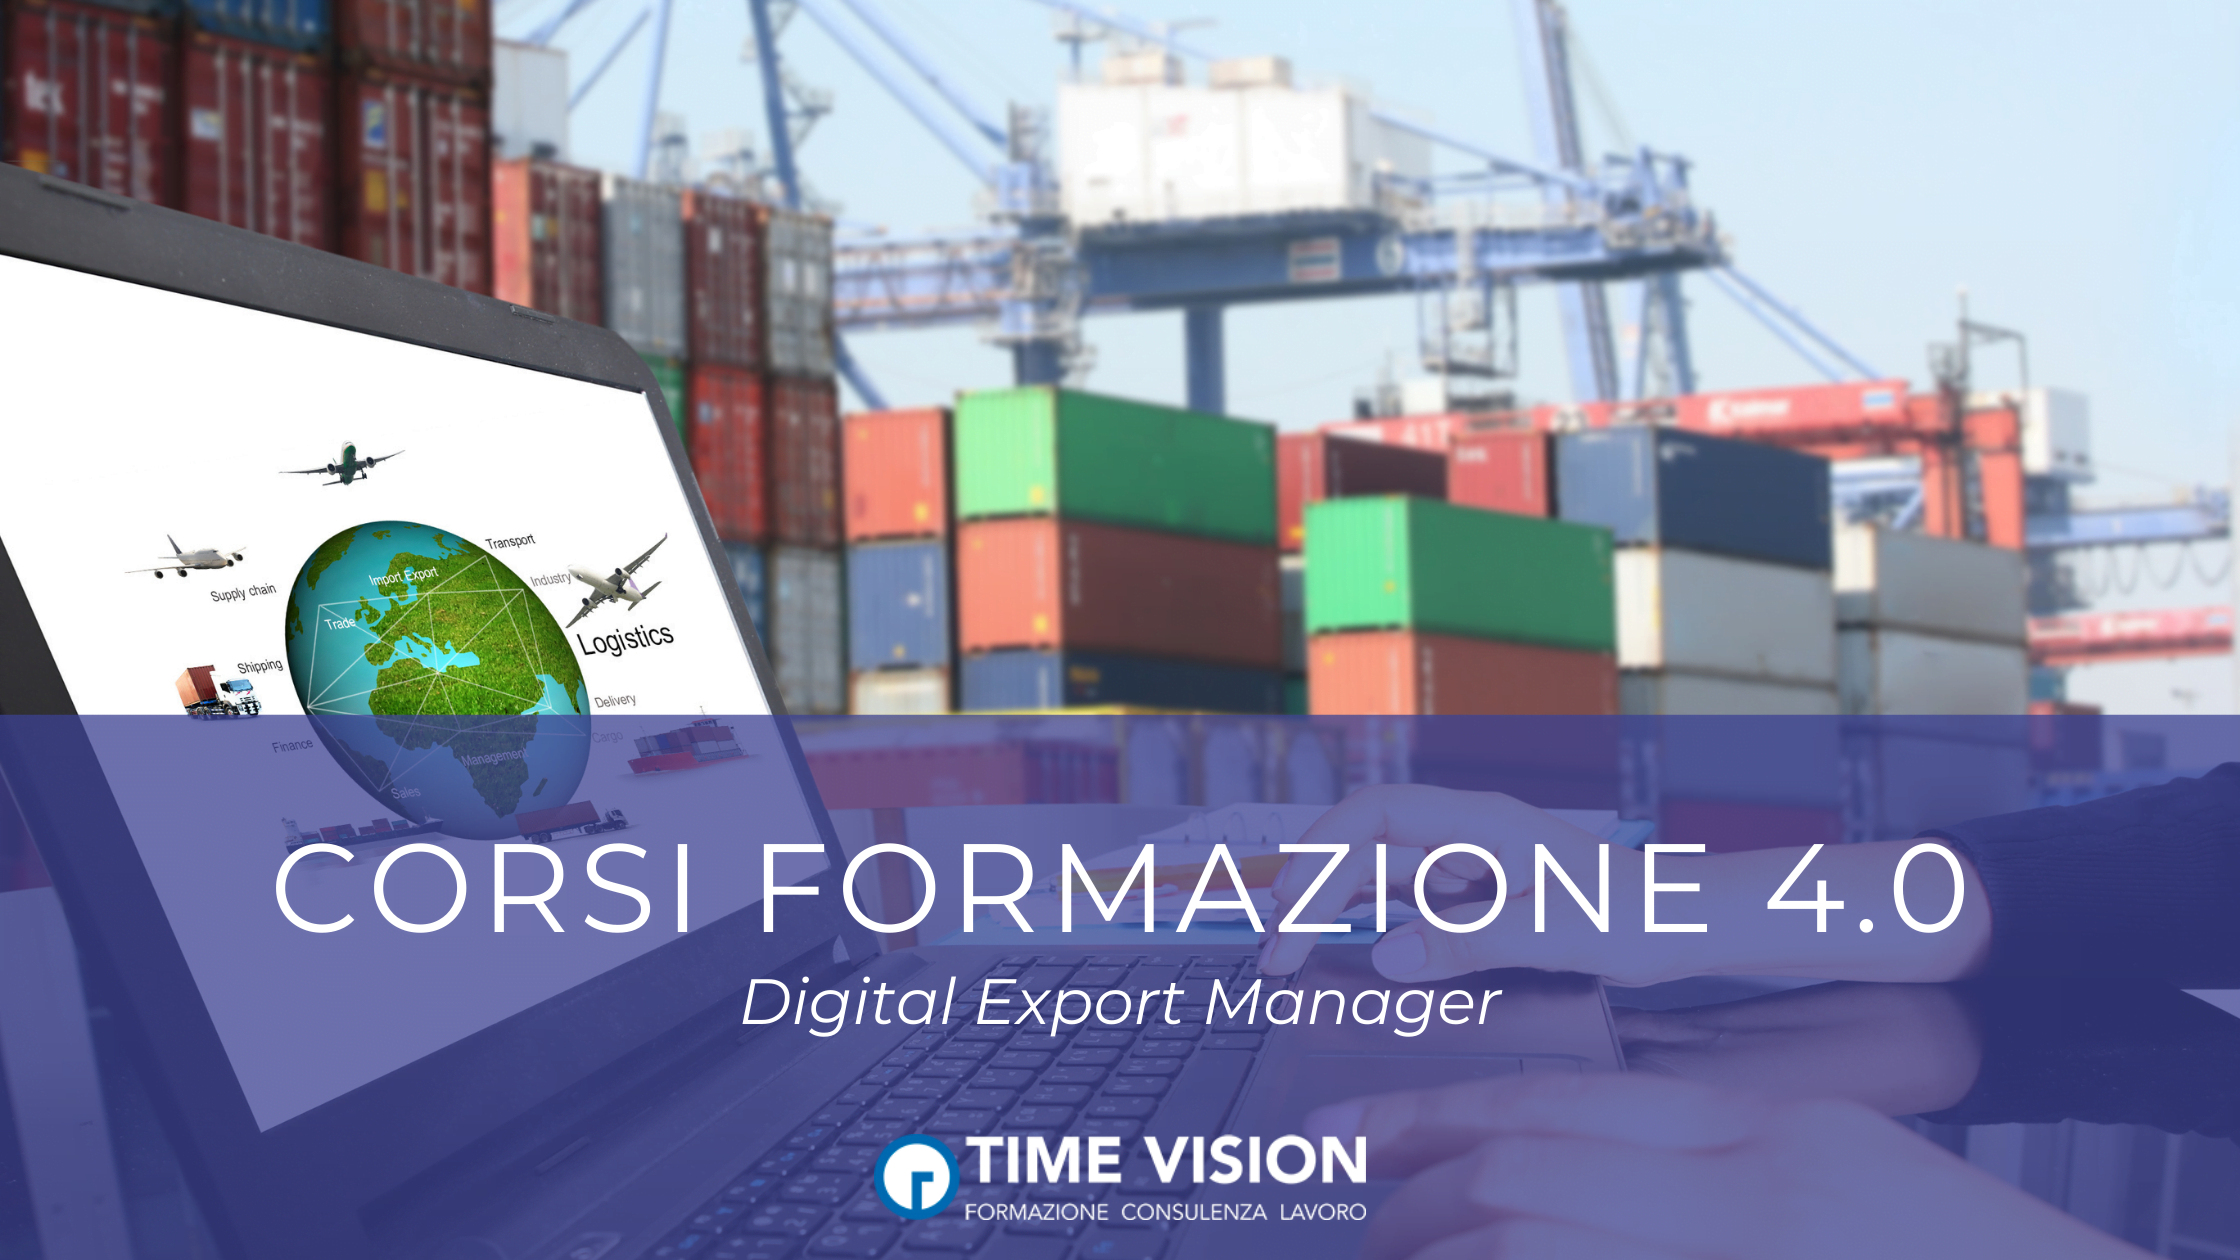 digital export manager, formazione 4.0